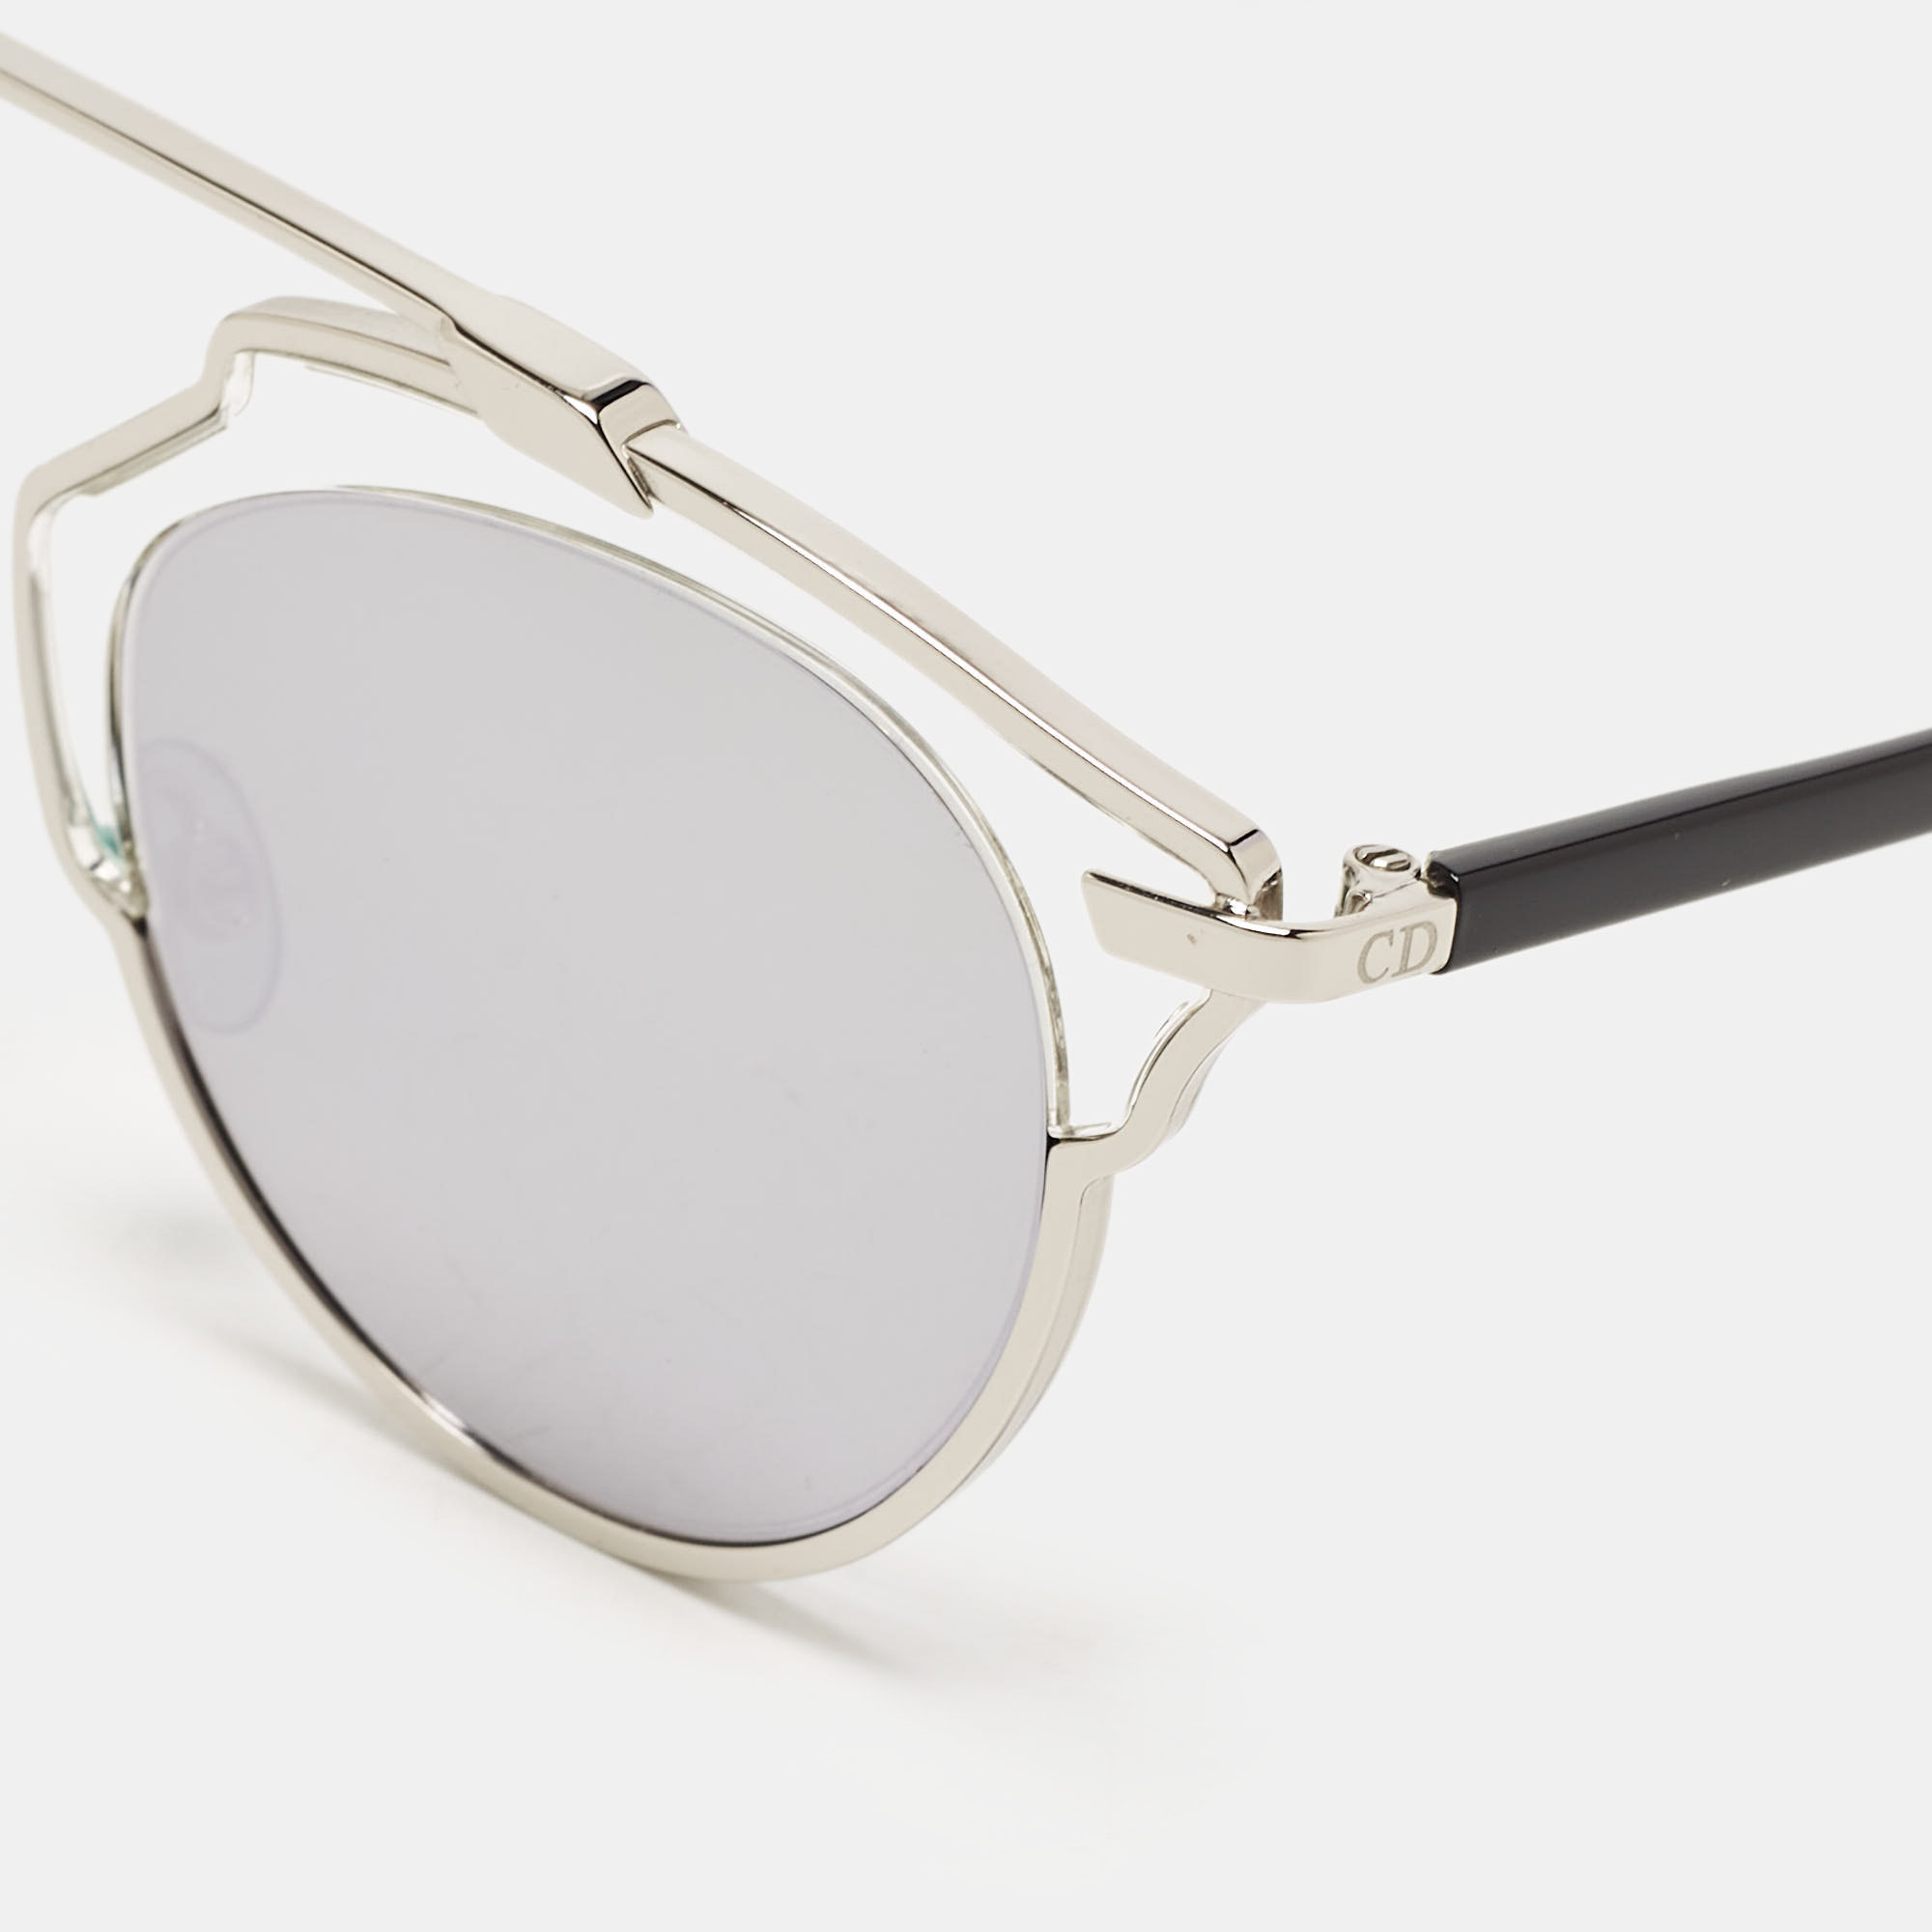 

Dior Silver Mirrored APPDC So Real Round Sunglasses